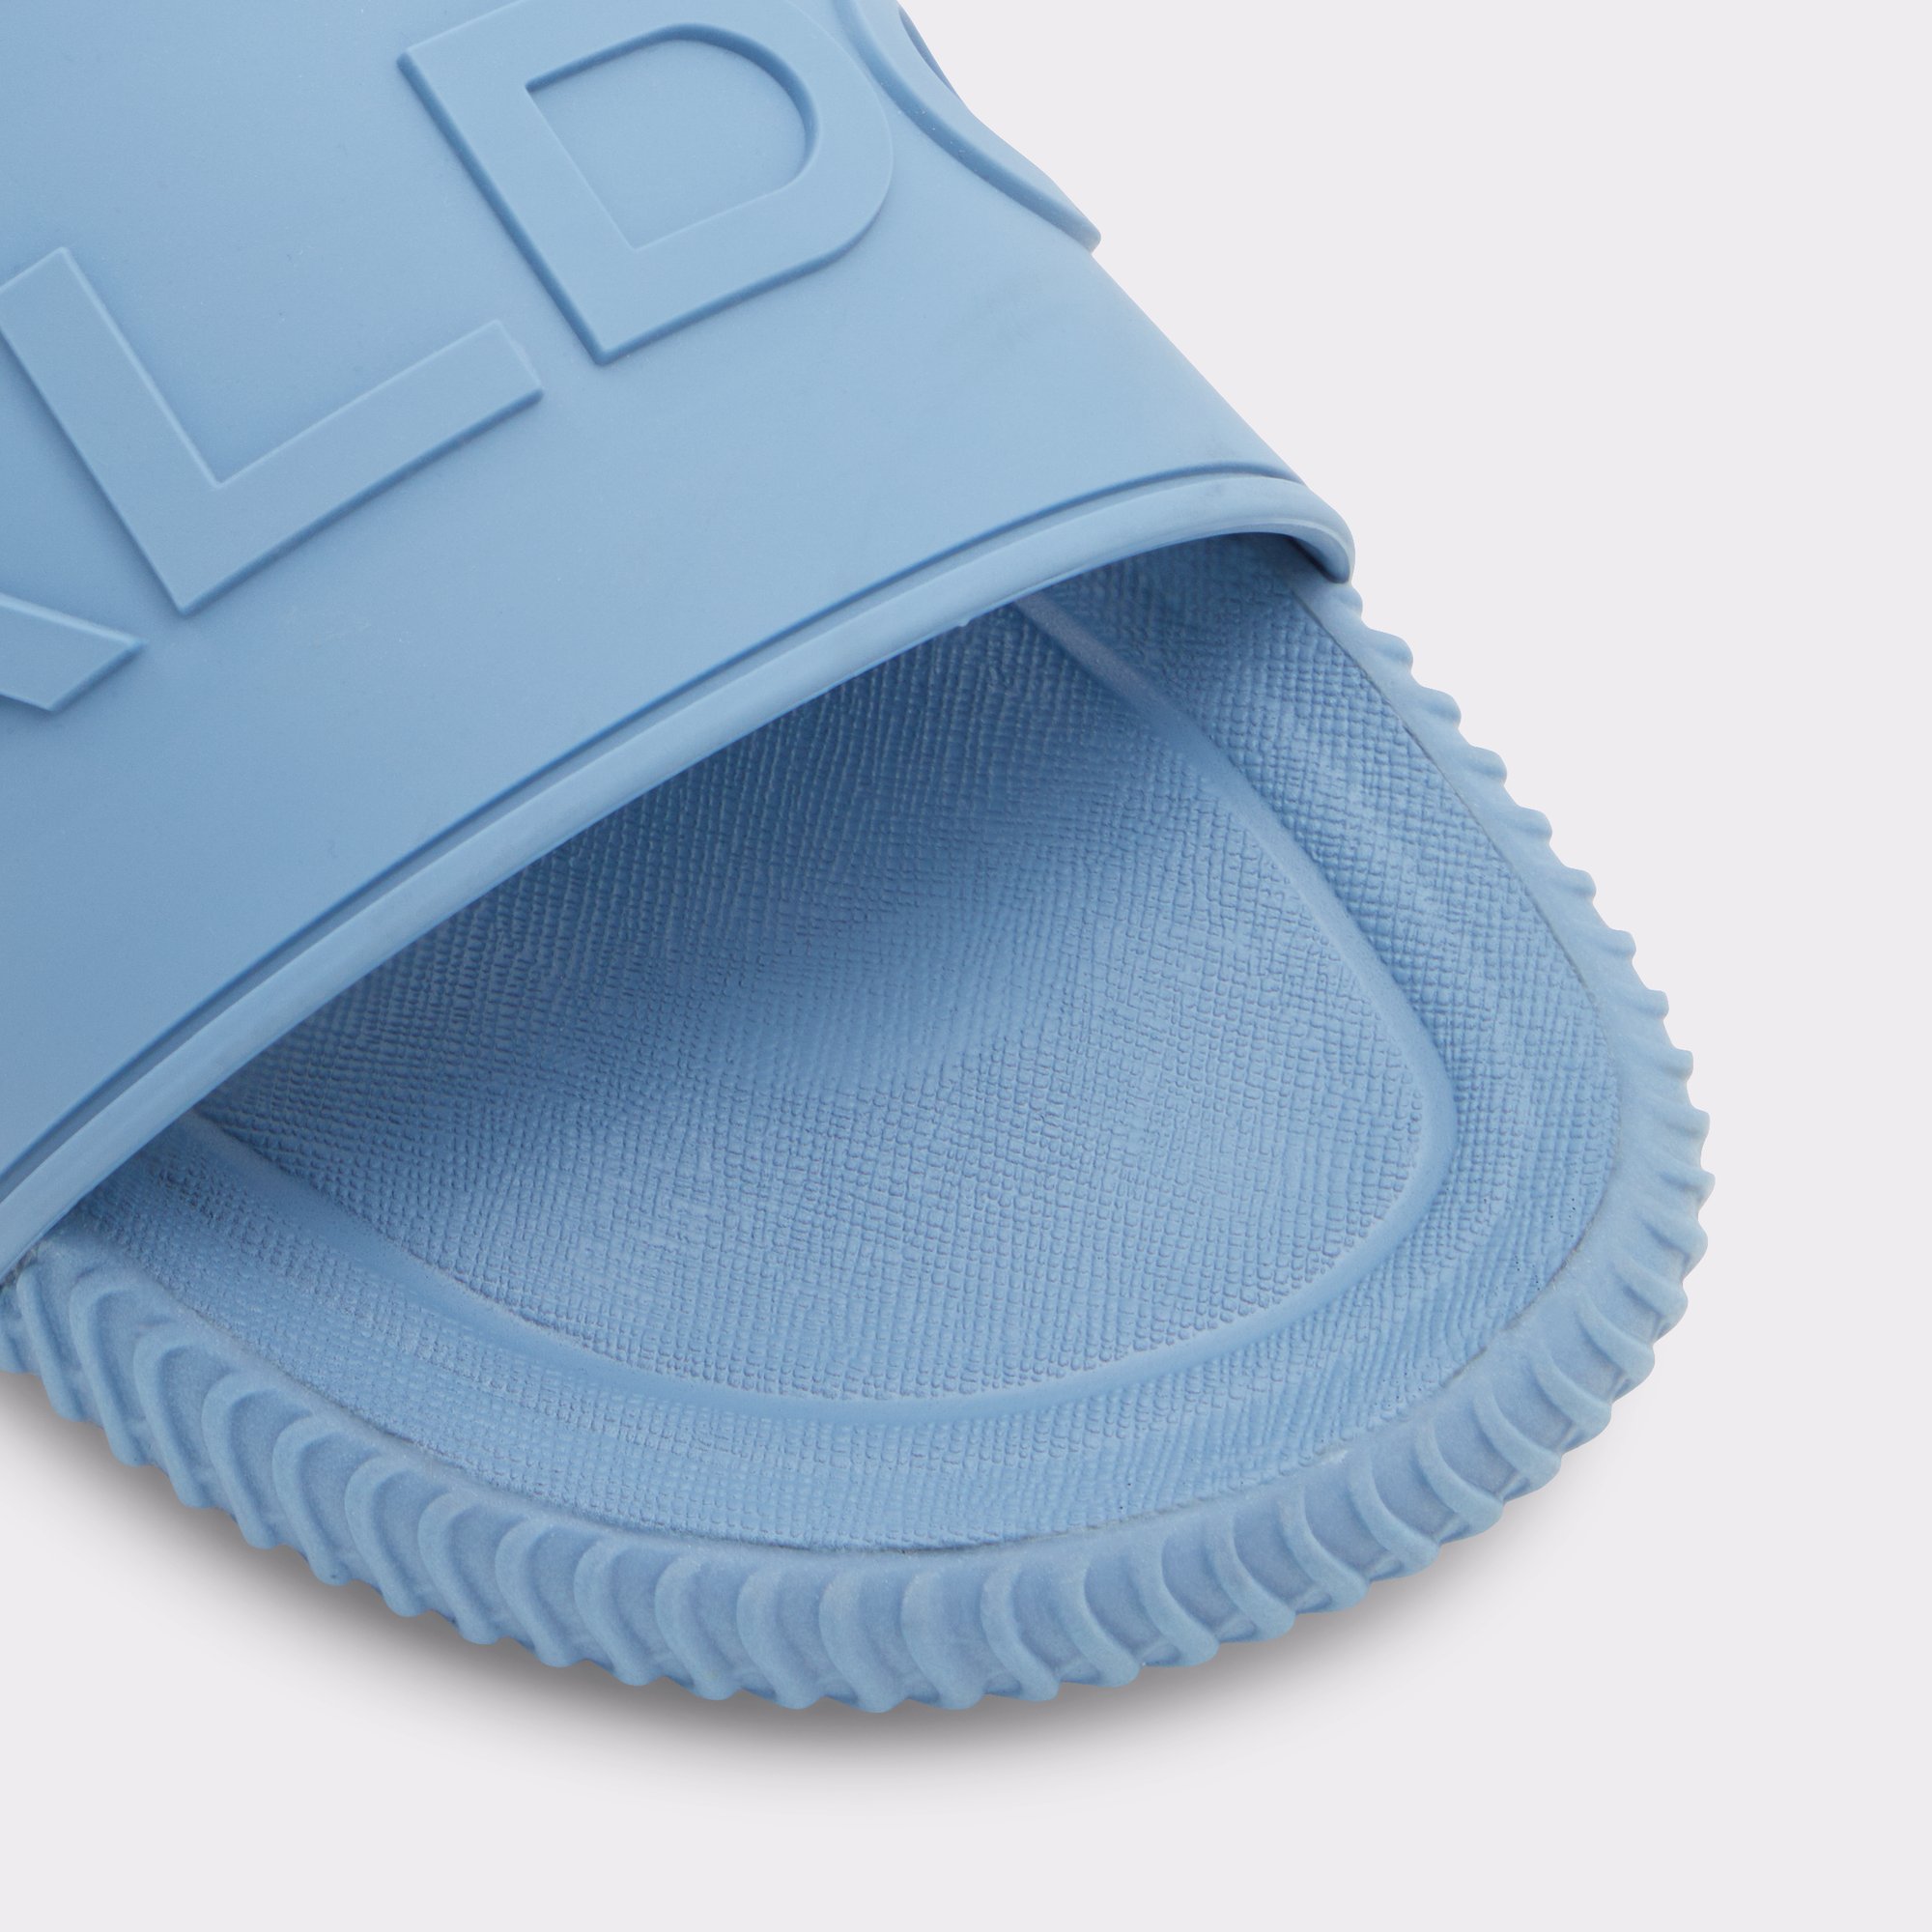 bleu de chauffe - IWATE sandals & ARLO backpack 😘😘😘 Sandals